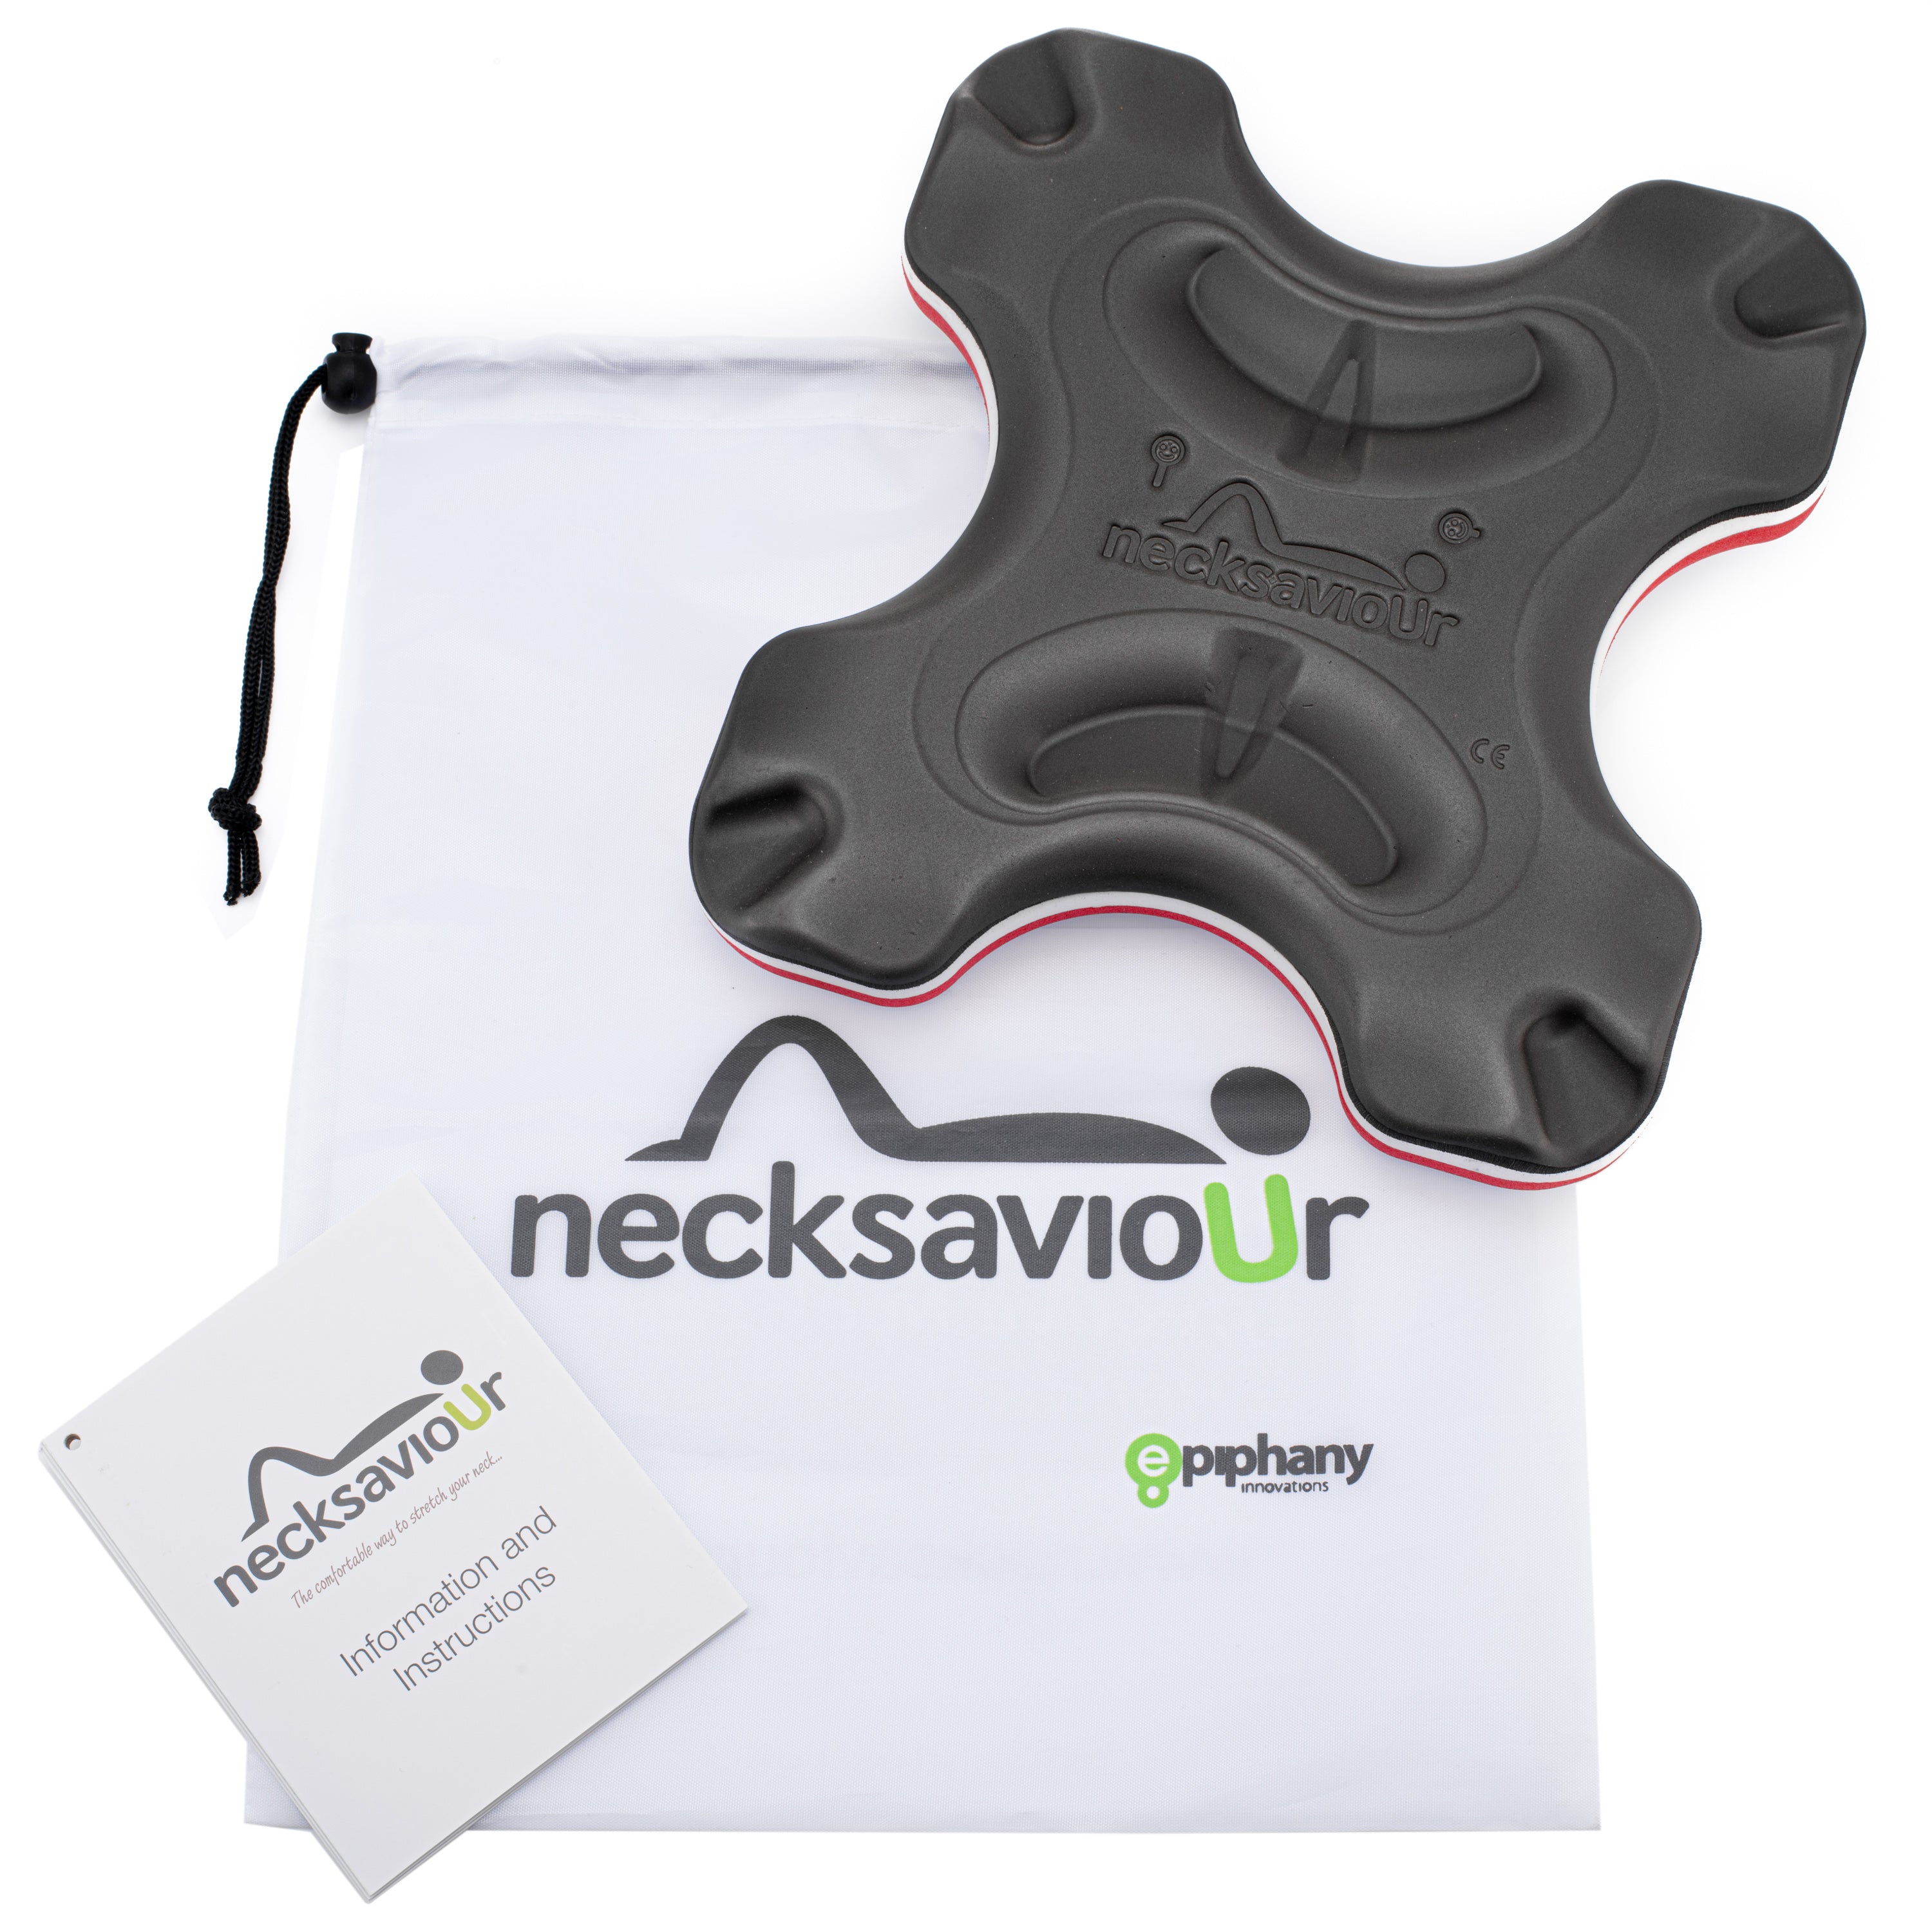 necksaviour Classic - clinic/studio 10 pack